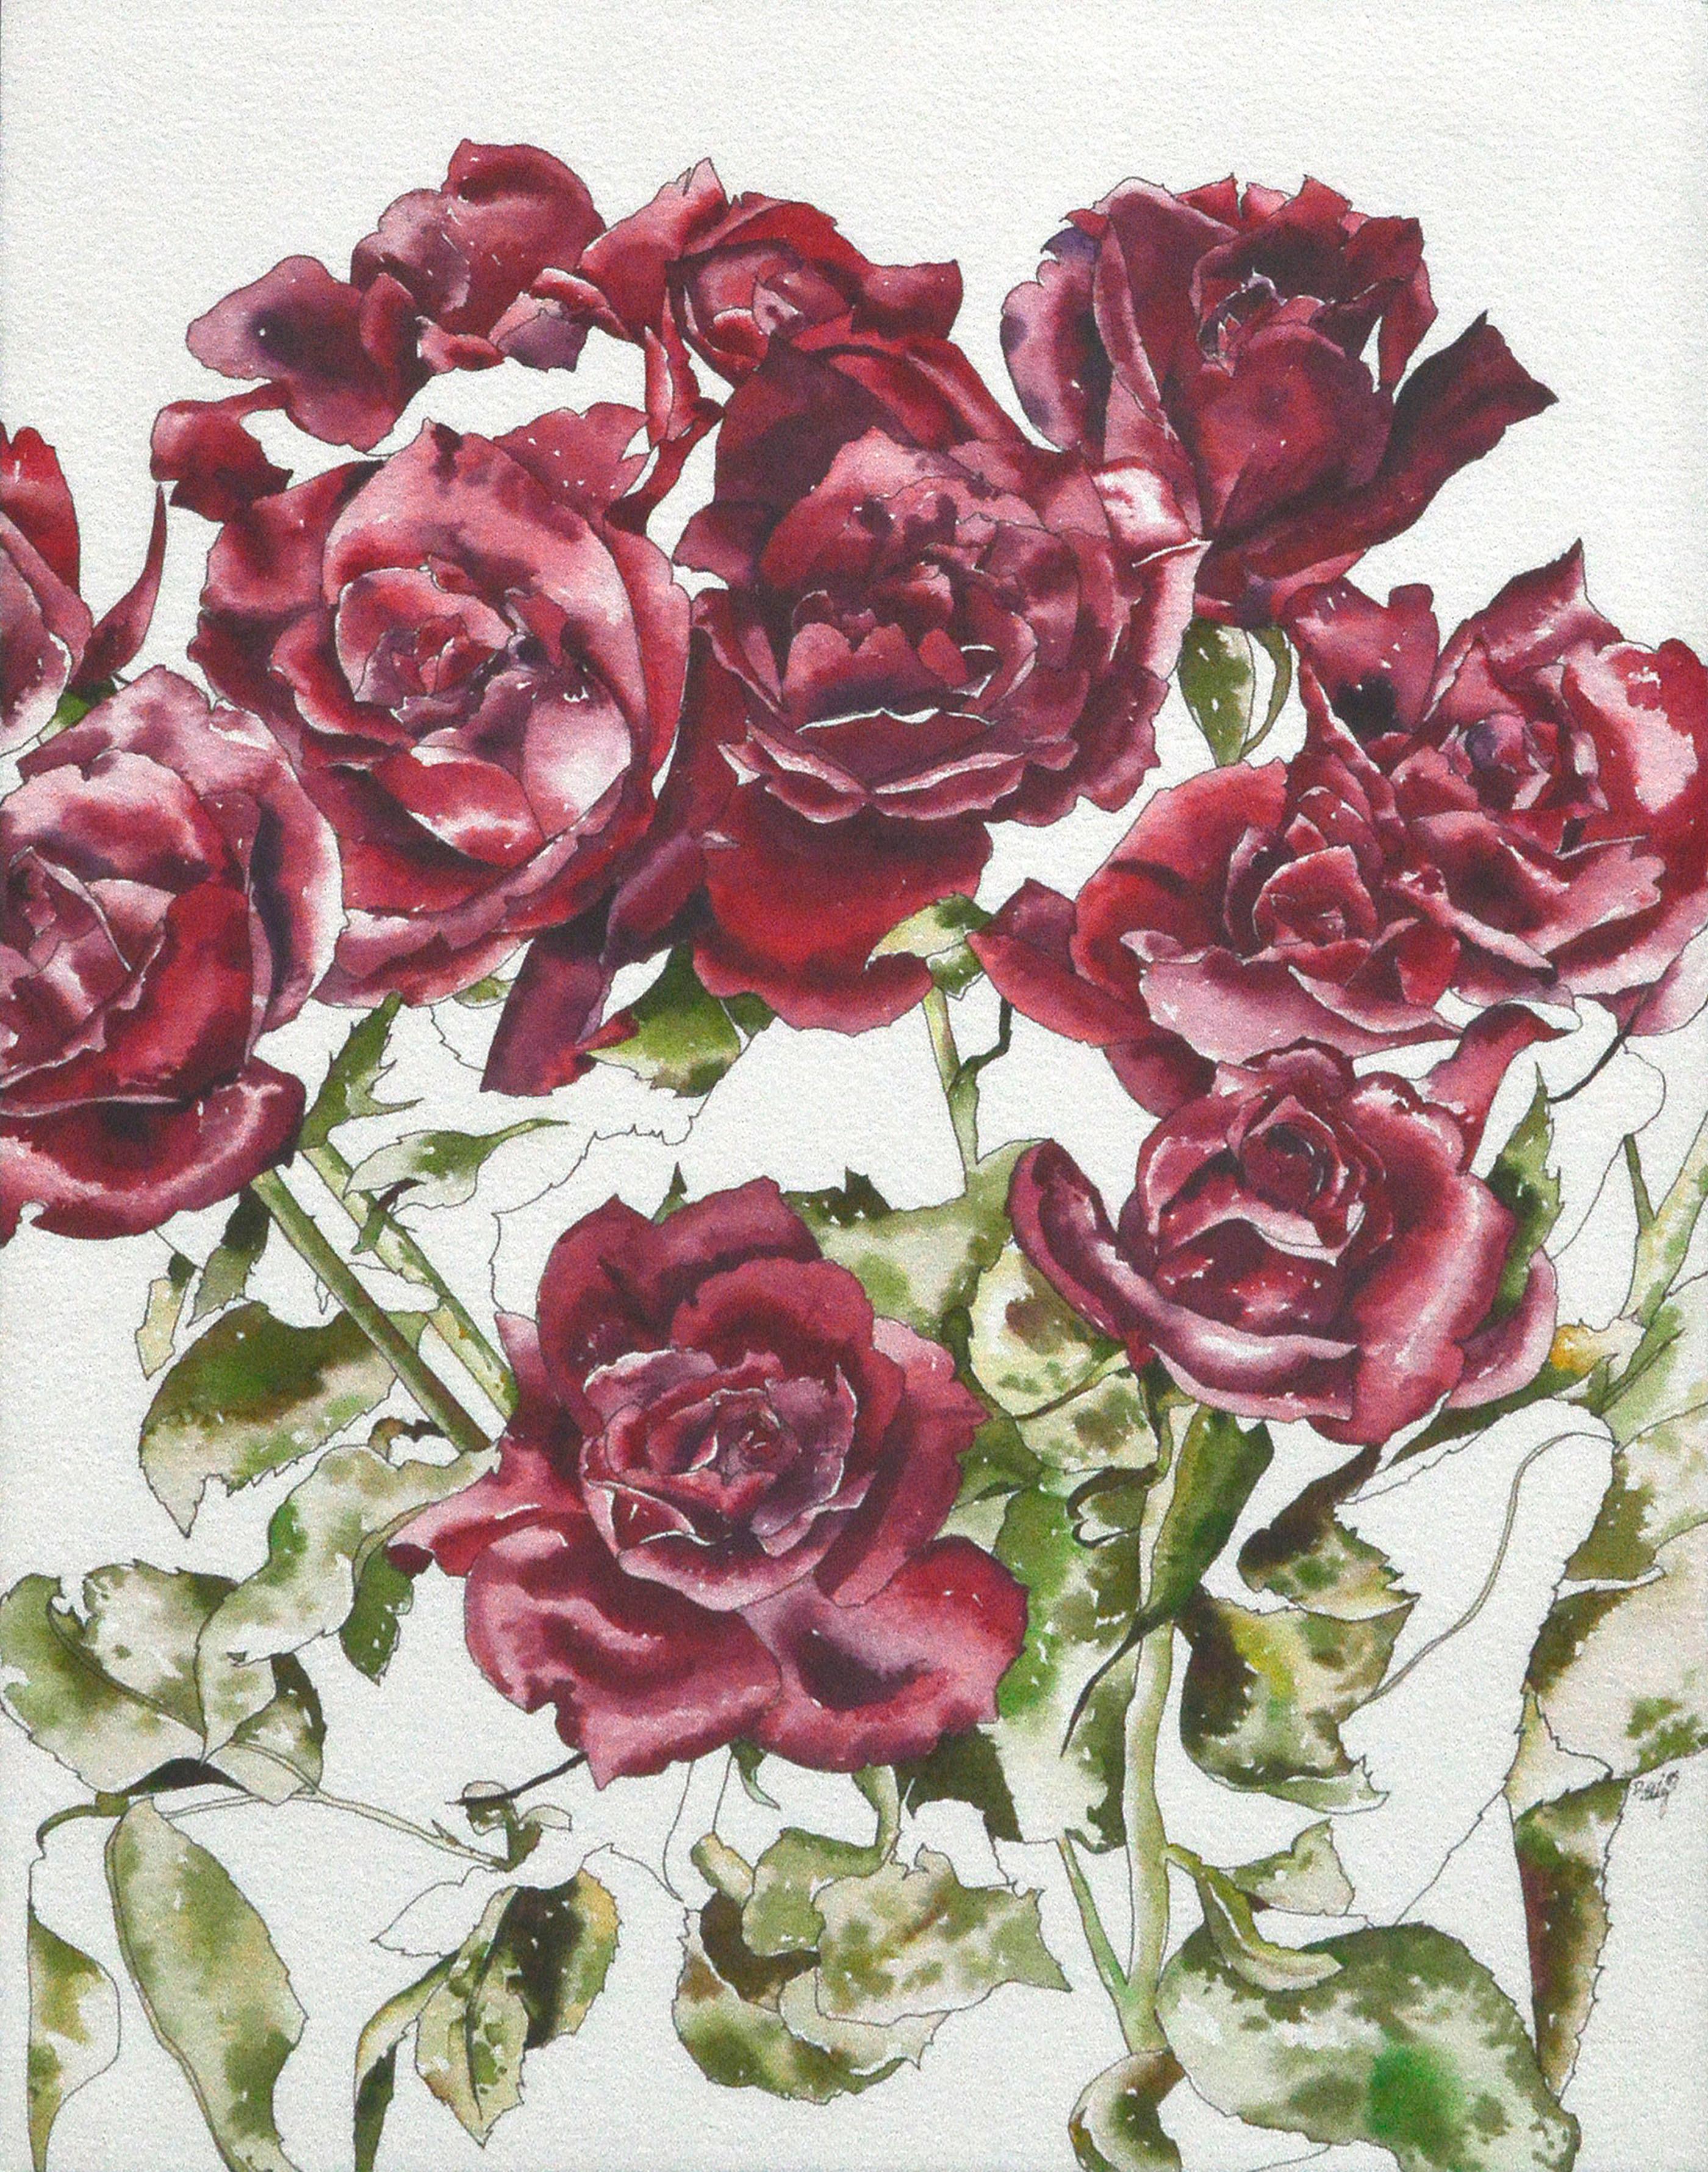 Red Roses - Botanical Study  - Art by Deborah Eddy